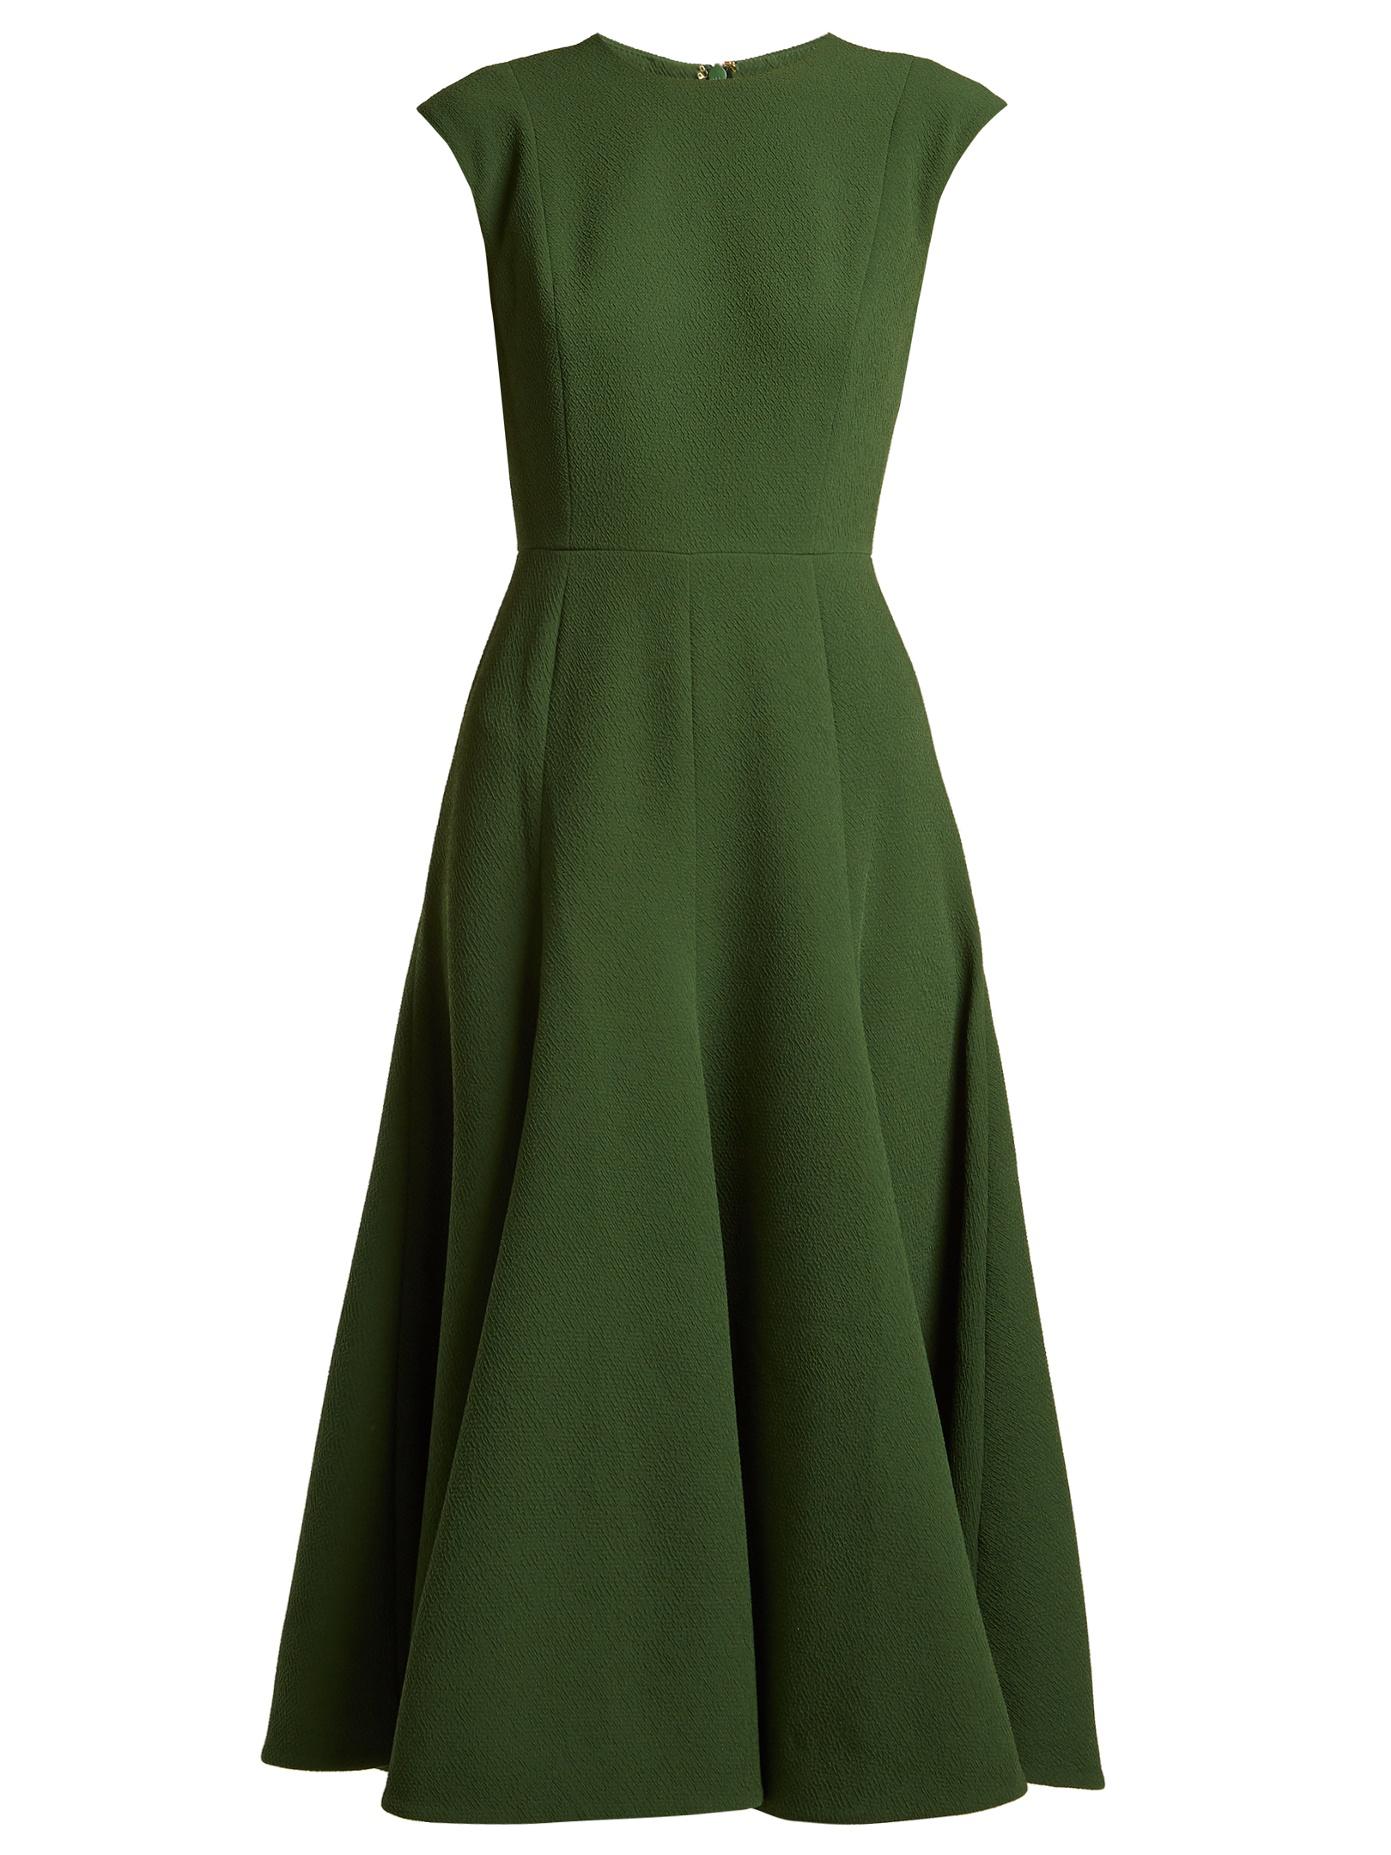 Lyst - Emilia wickstead Denver Crepe A-line Midi Dress in Green